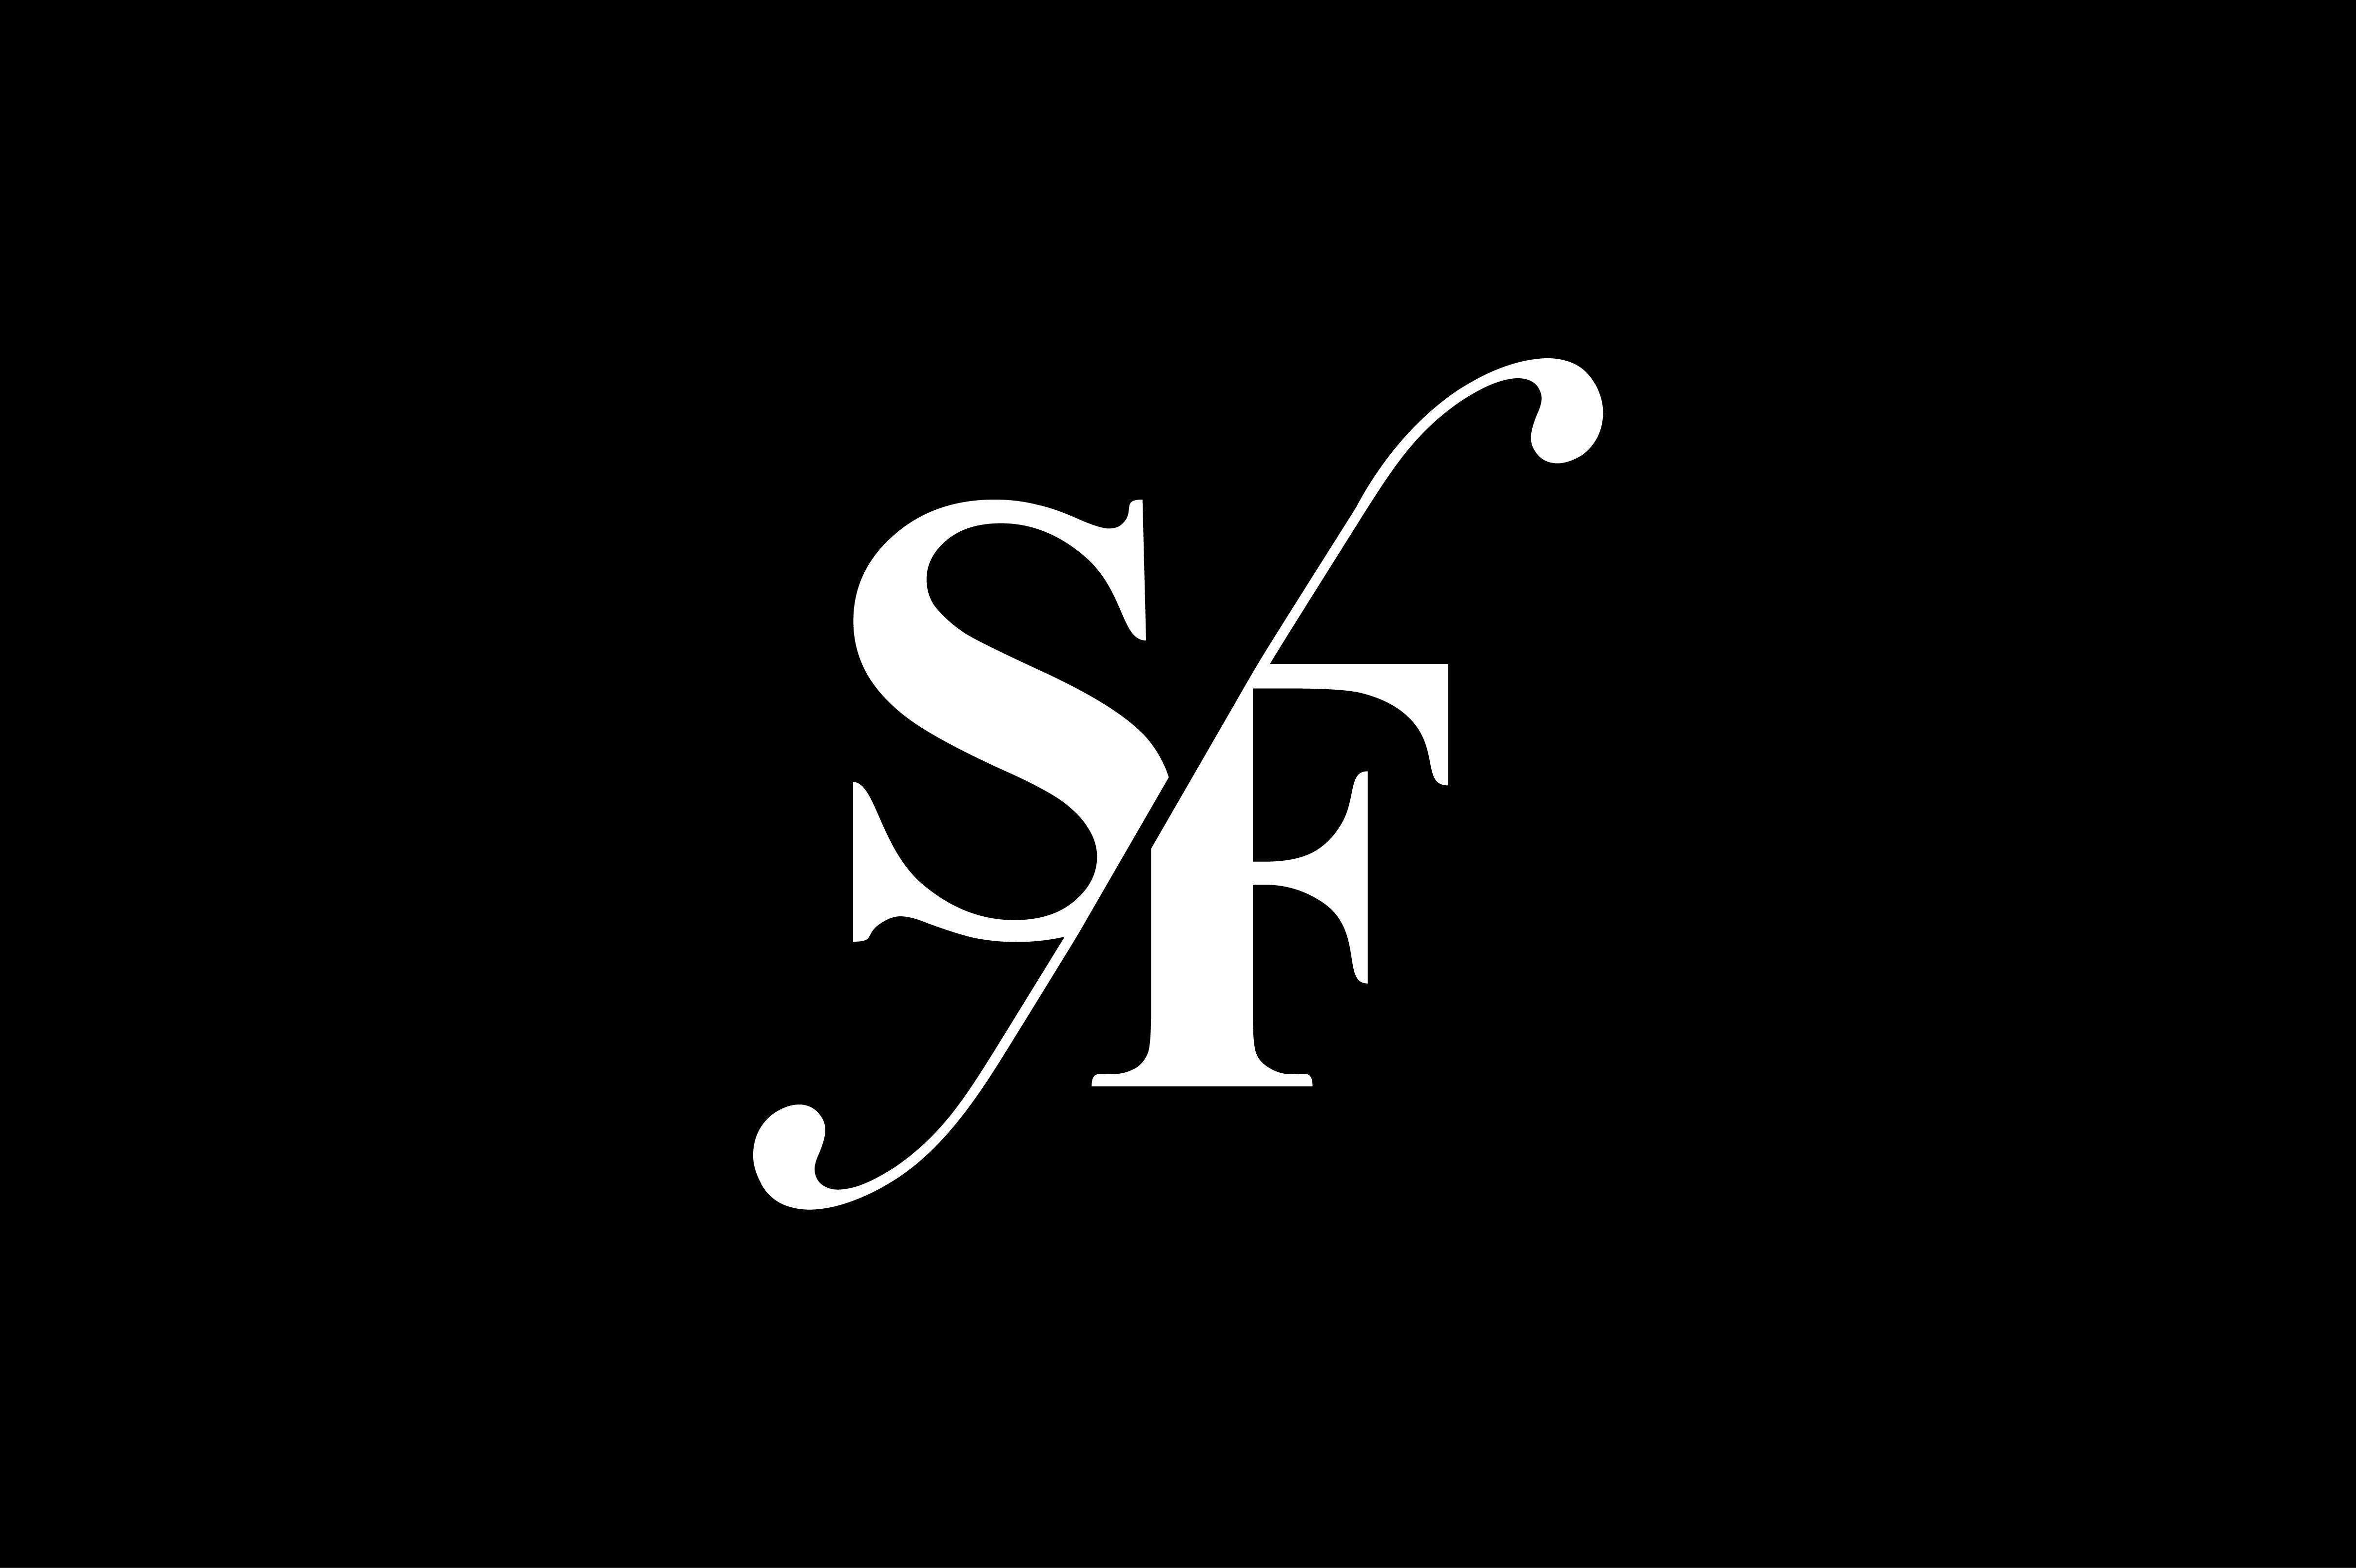  SF Monogram Logo Design By Vectorseller TheHungryJPEG